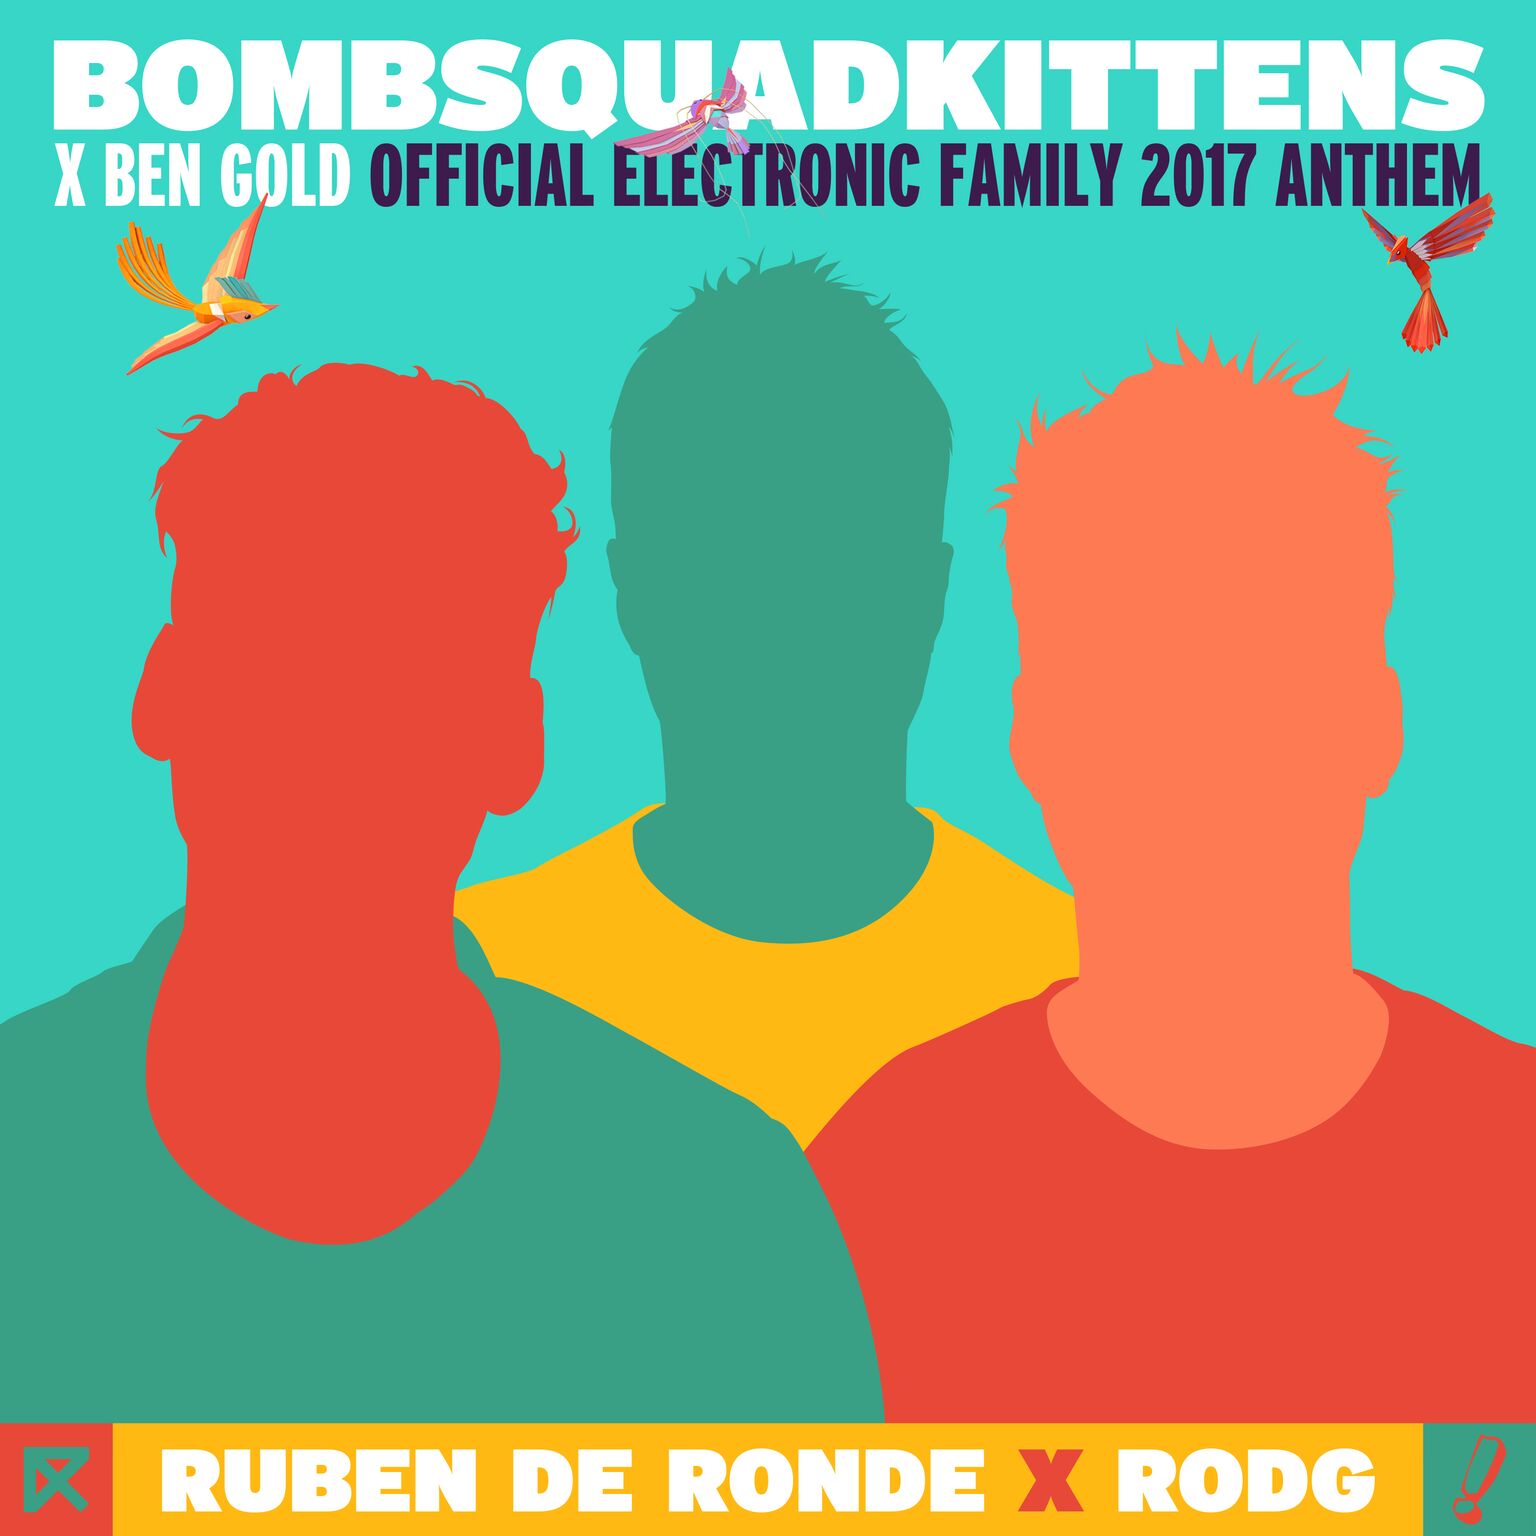 Electronic Family 2017 Anthem: Ruben de Ronde & Rodg & Ben Gold - BombSquadKittens